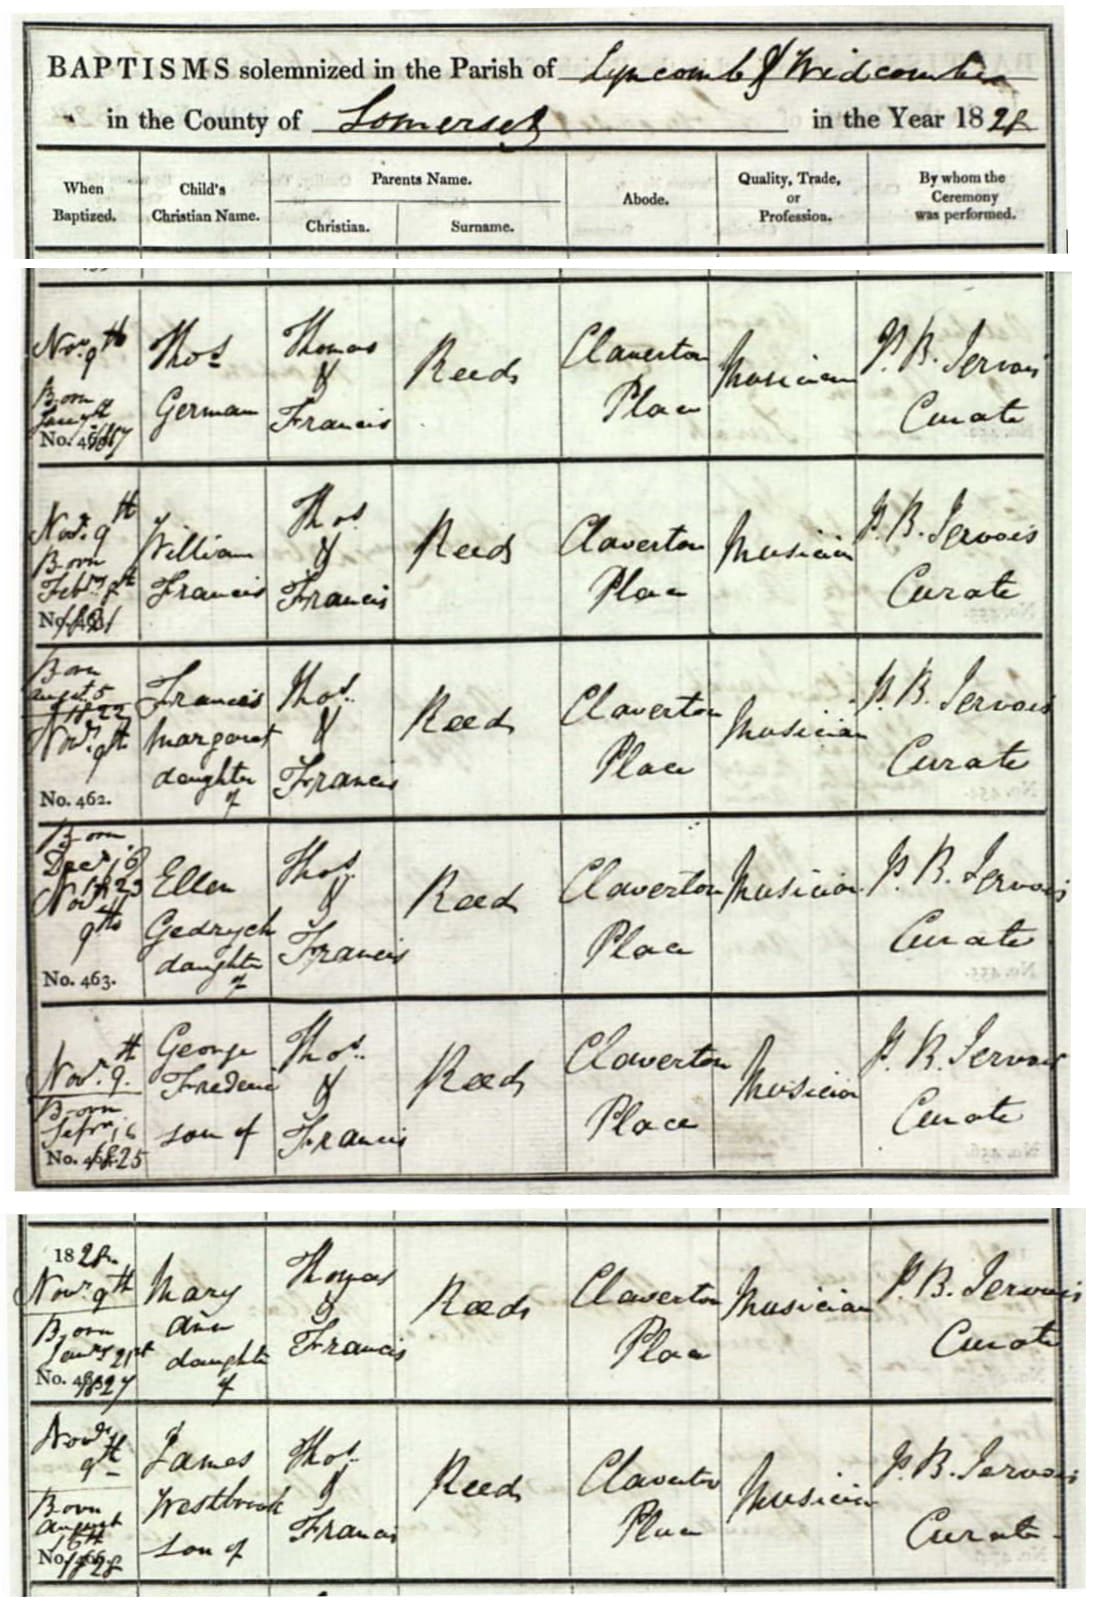 Reed family baptisms, 1828